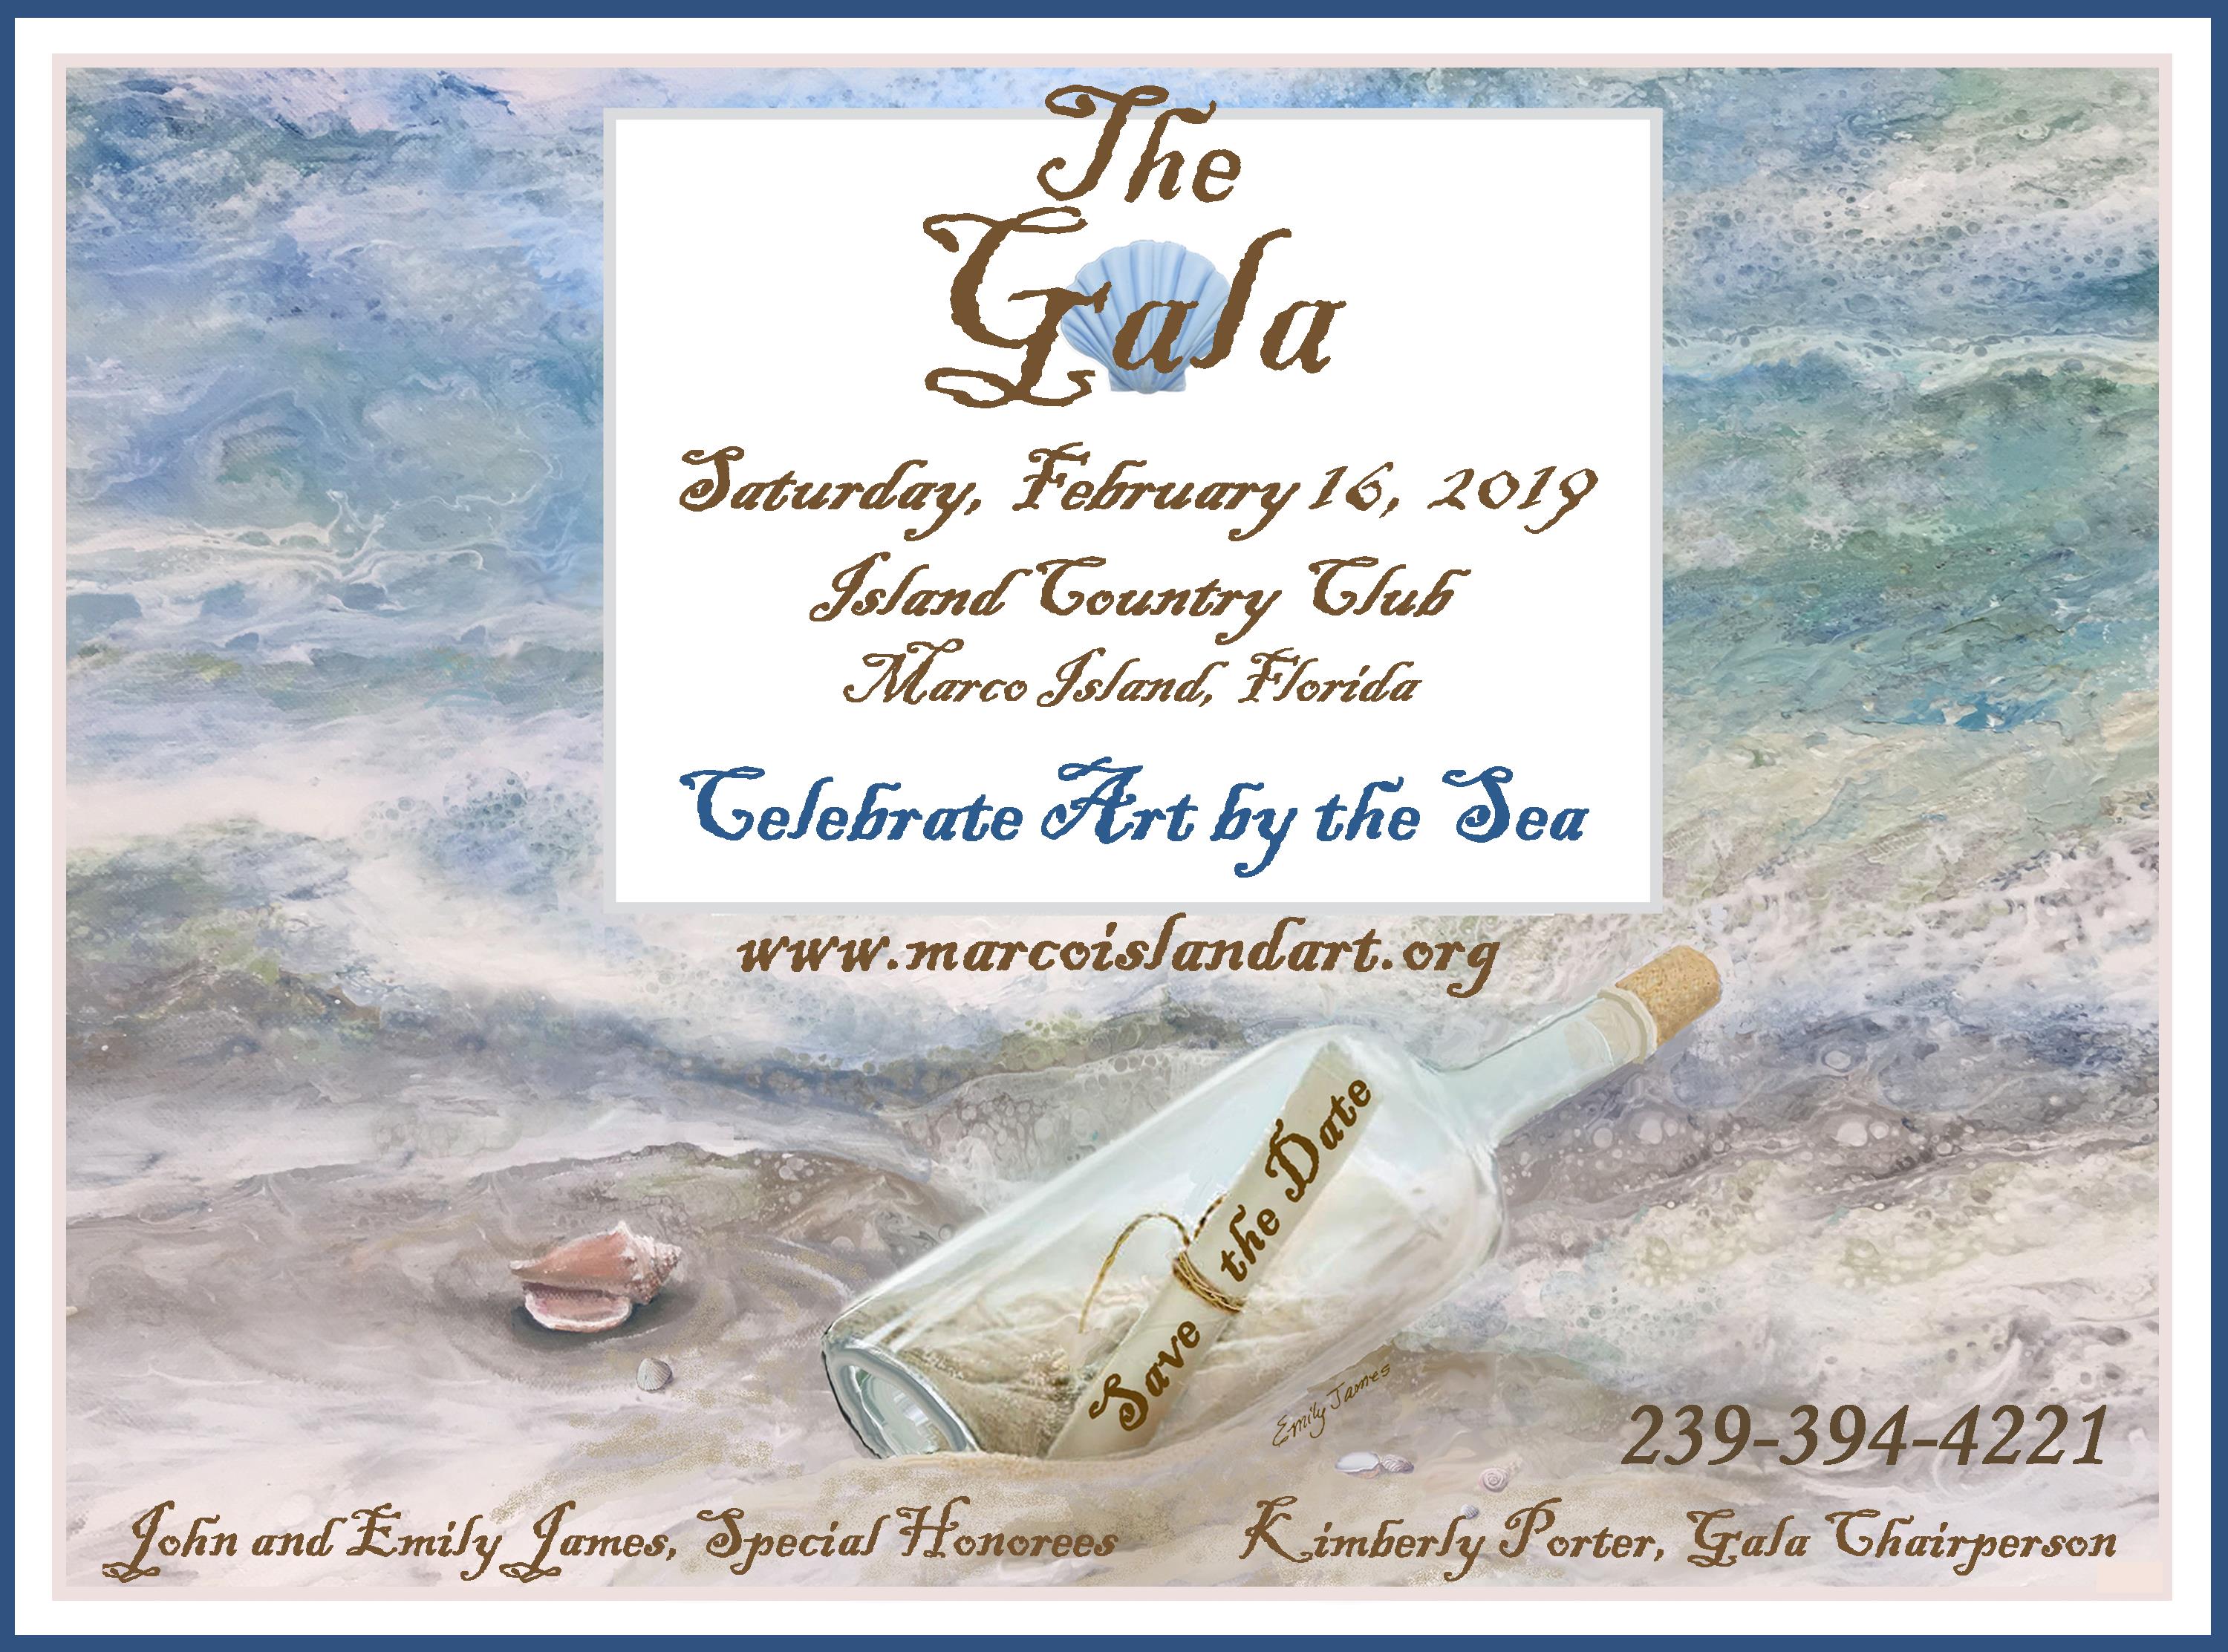 The Gala Celebrate Art by the Sea Marco Island